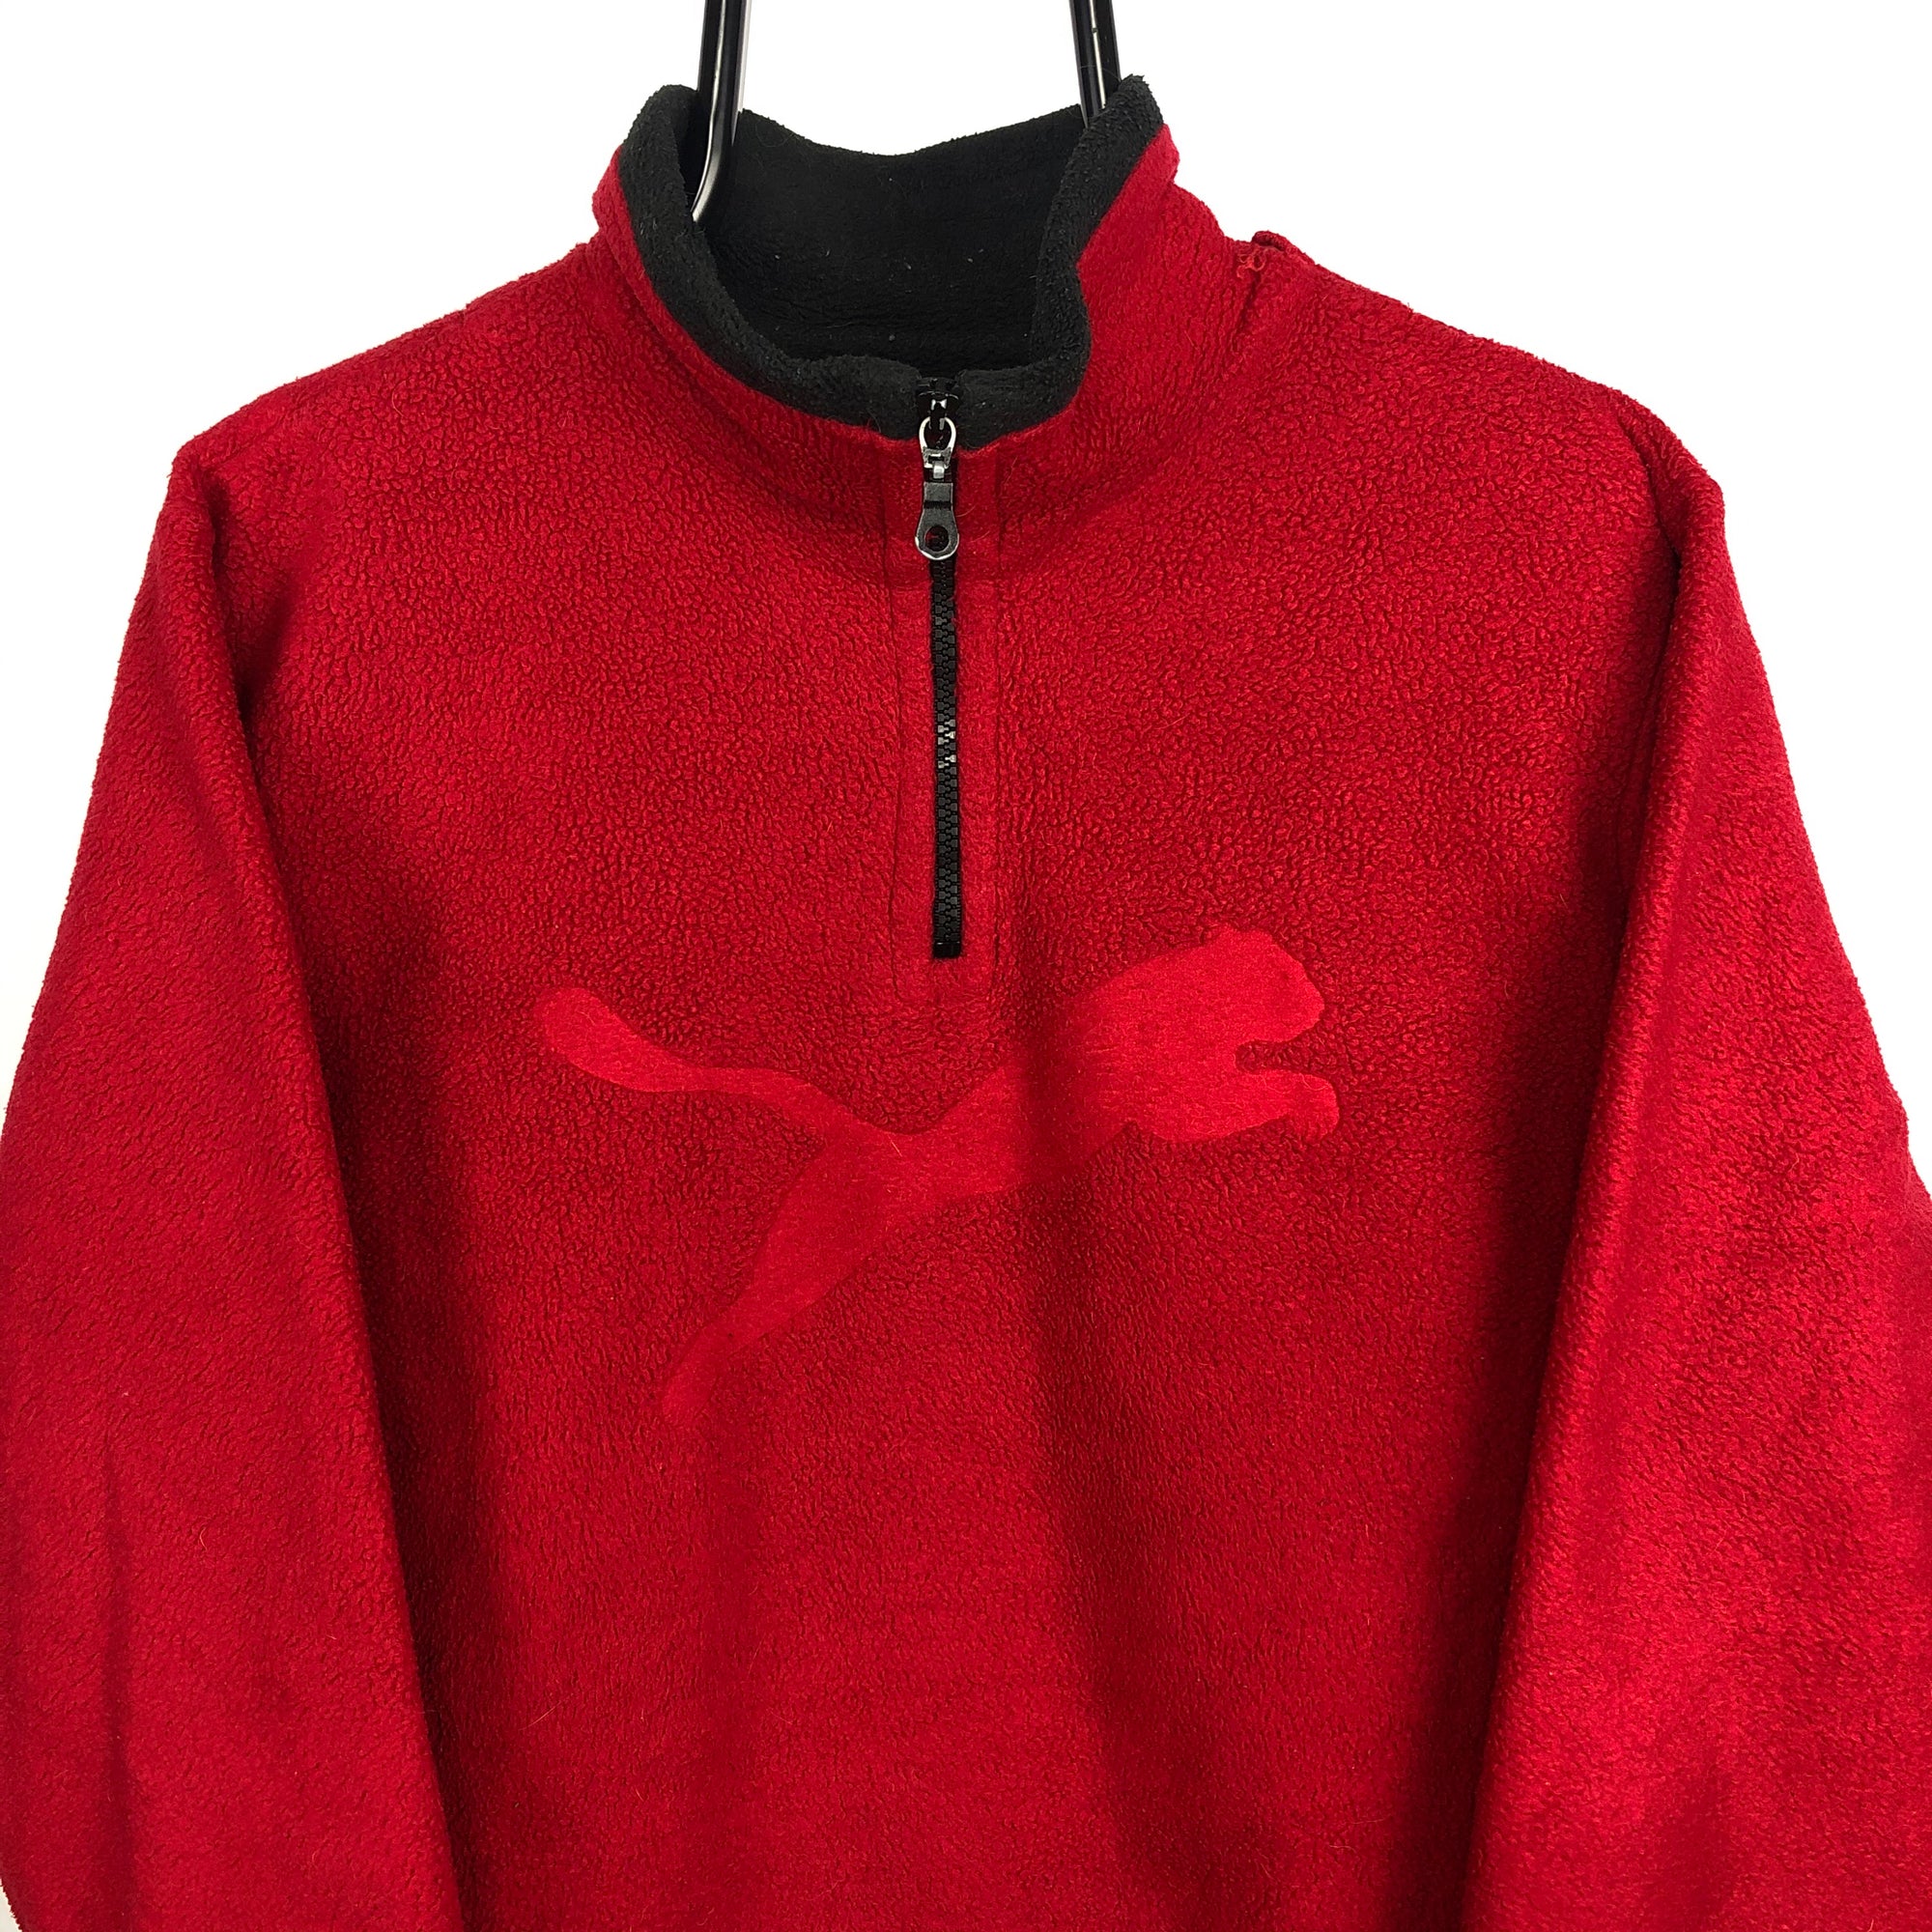 Vintage Puma Embossed Logo Fleece in Red/Black - Men's Medium/Women's Large